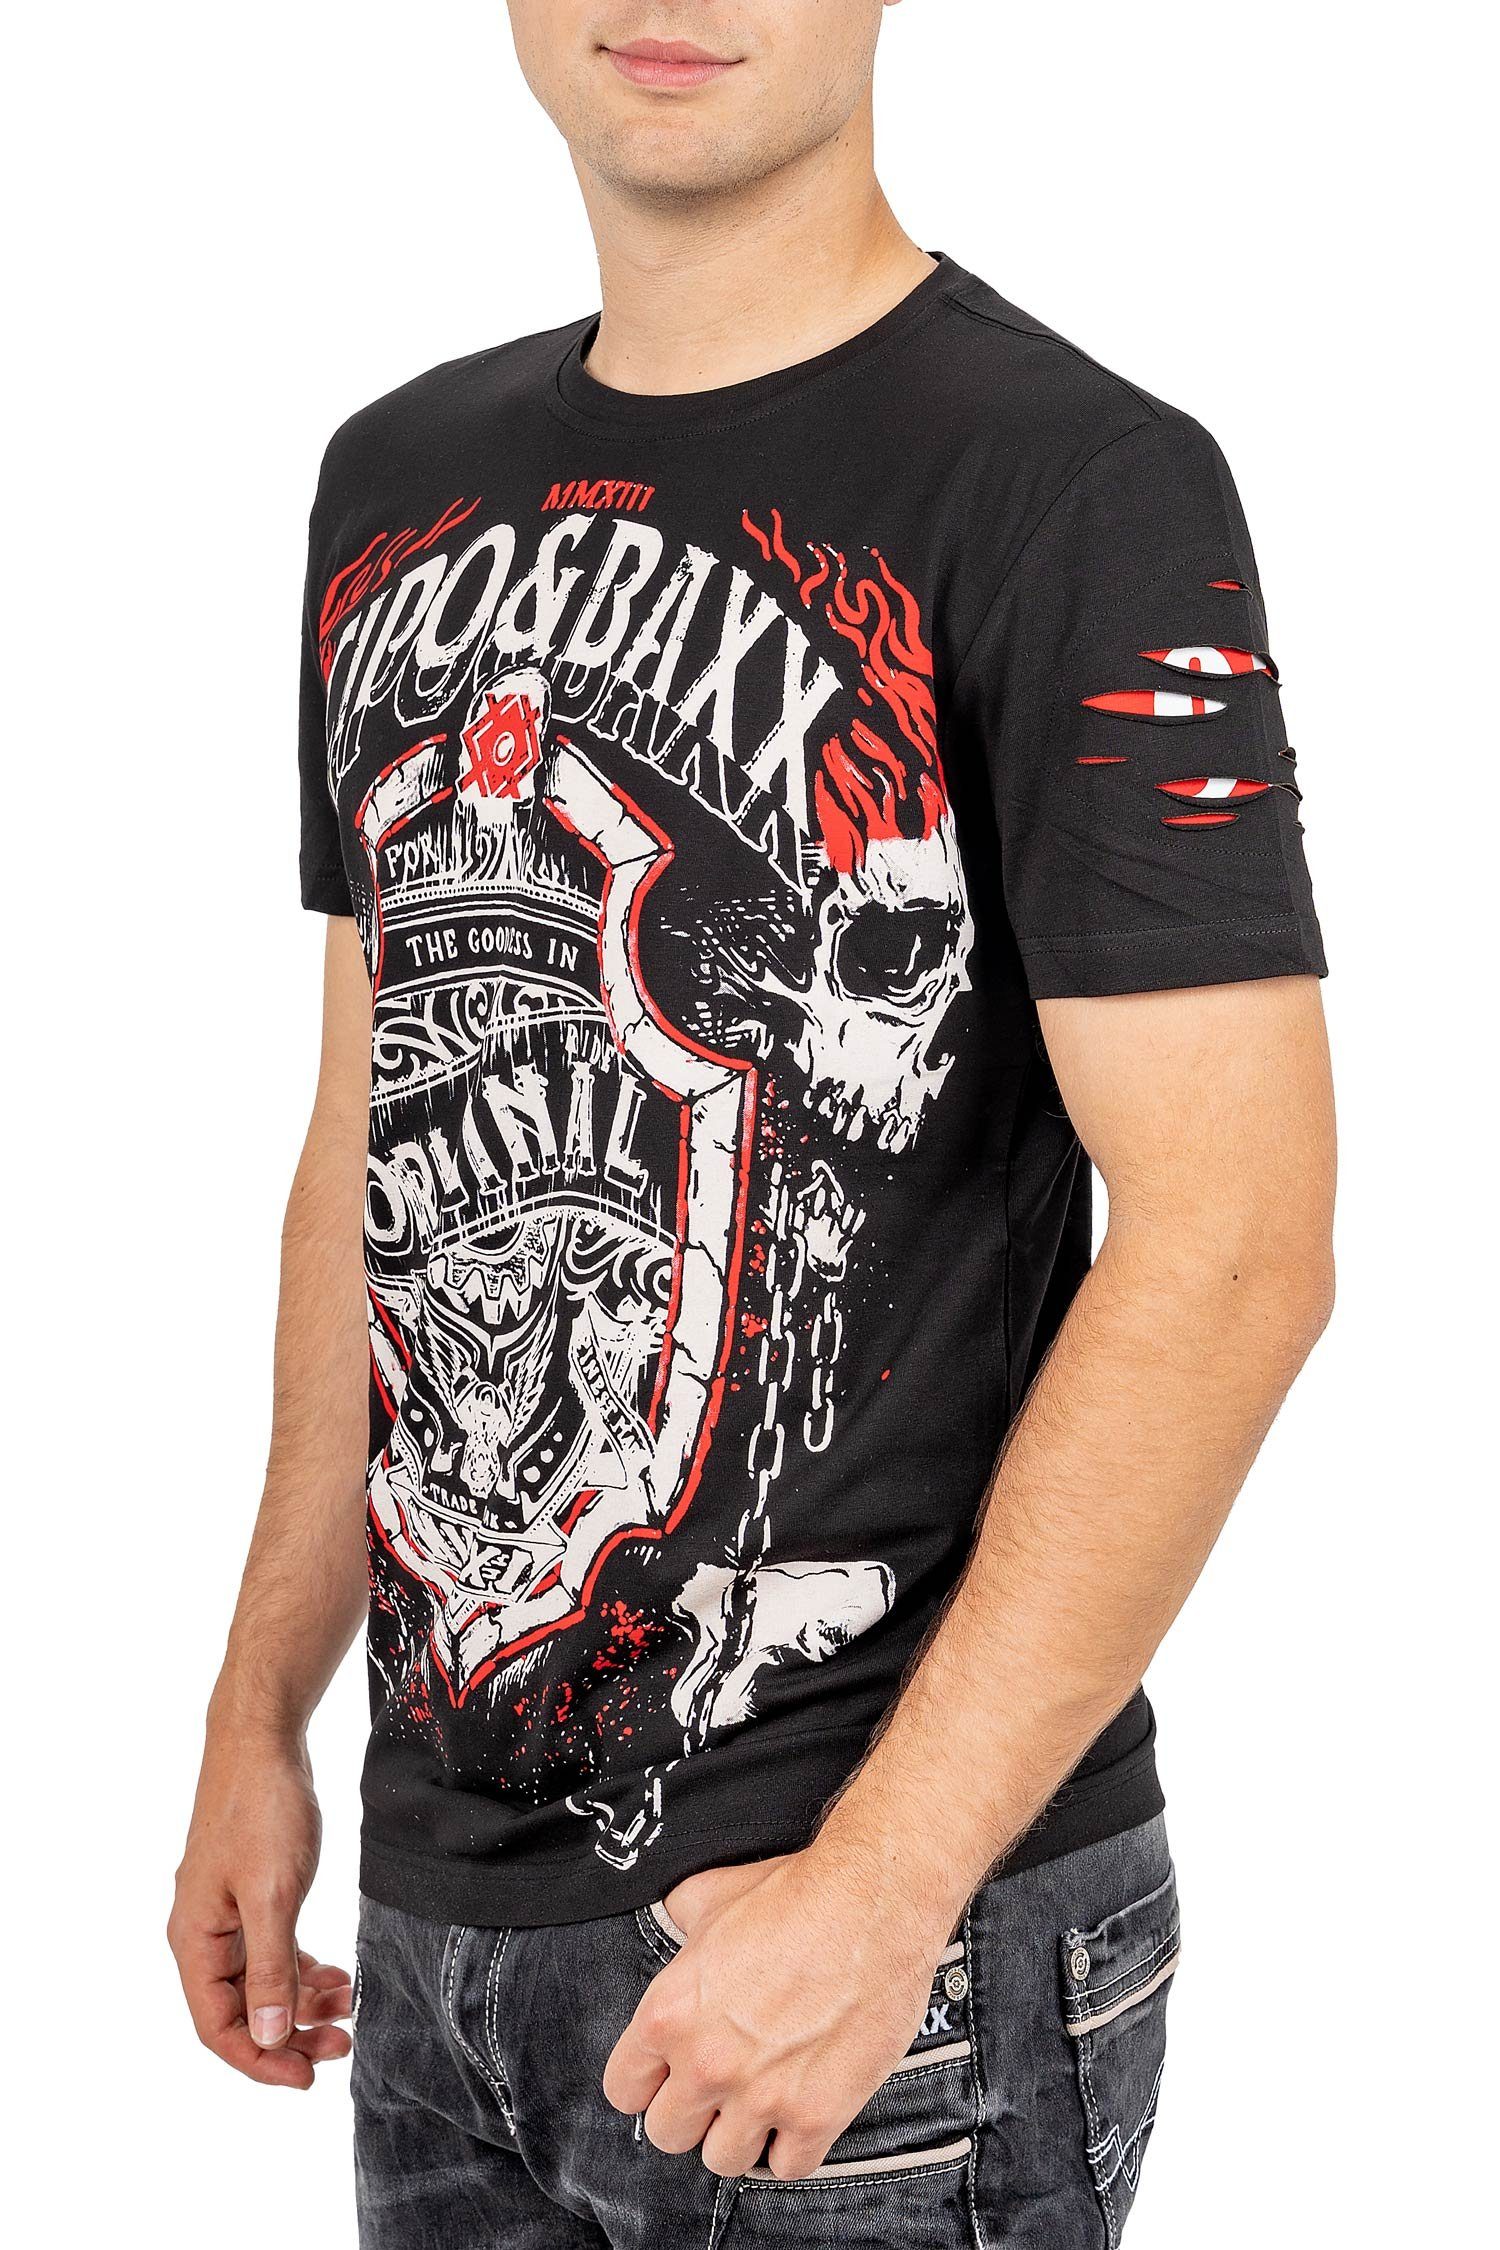 Cipo & Baxx Extravagantes Kurzarm T-Shirt im Ghost Rider Style mit Print-Shirt Totenkopf schwarz BA-CT772 (1-tlg)